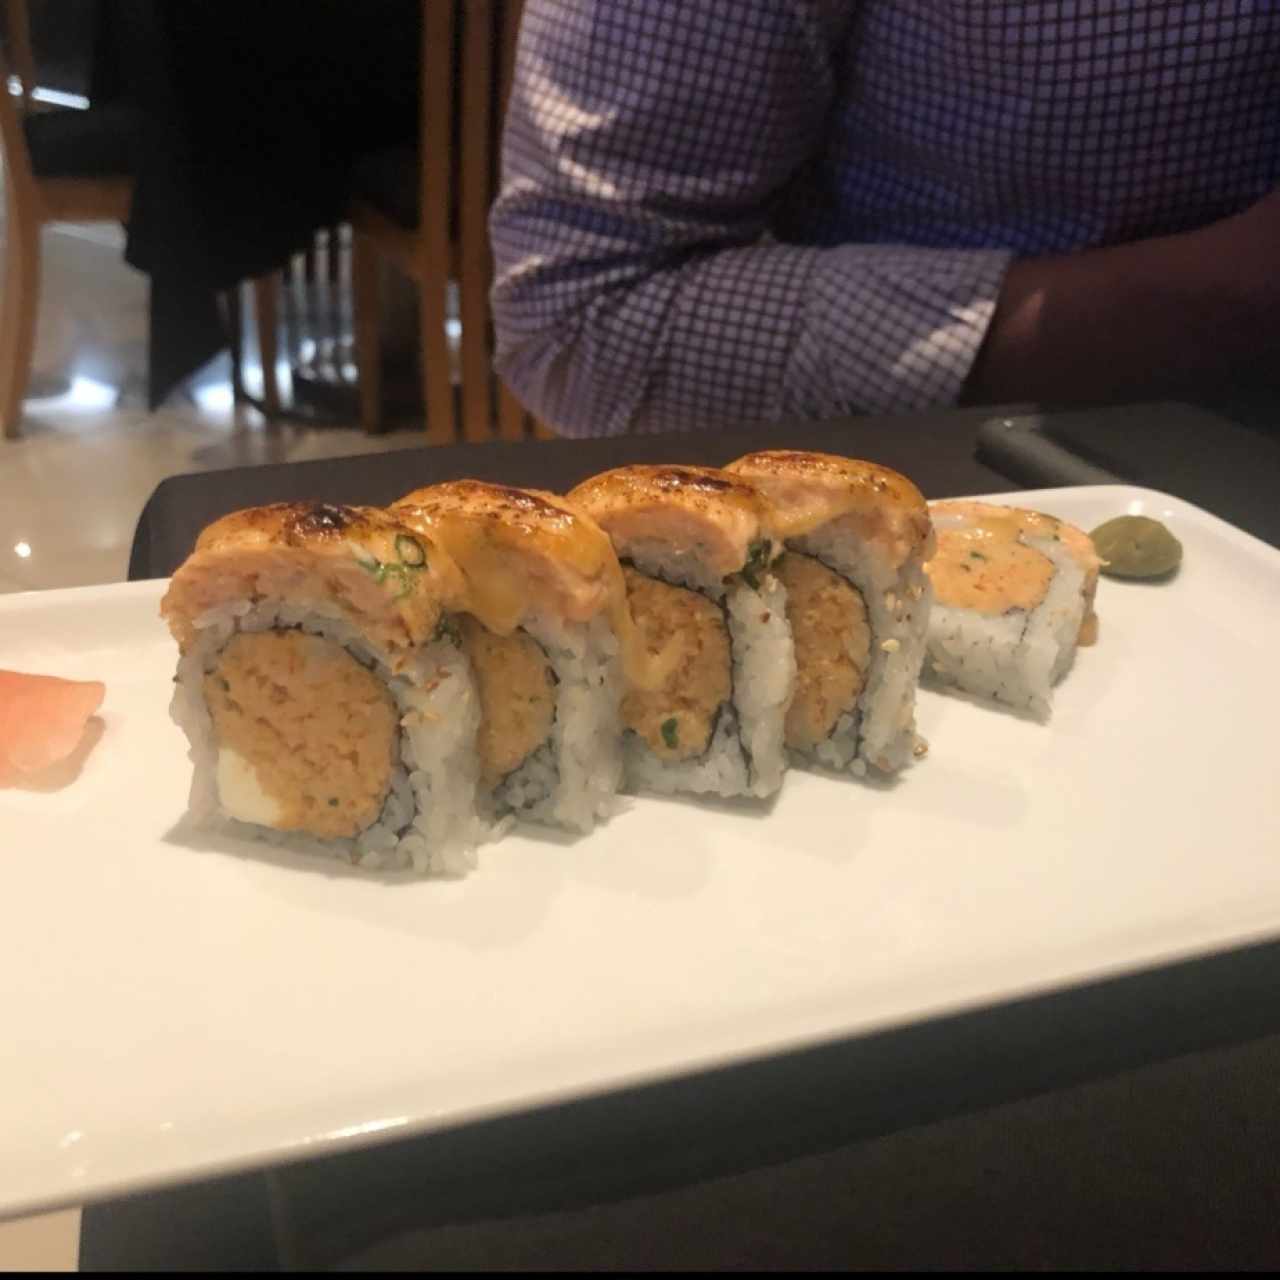 Sushi rolls/Makis - Osaka ebi